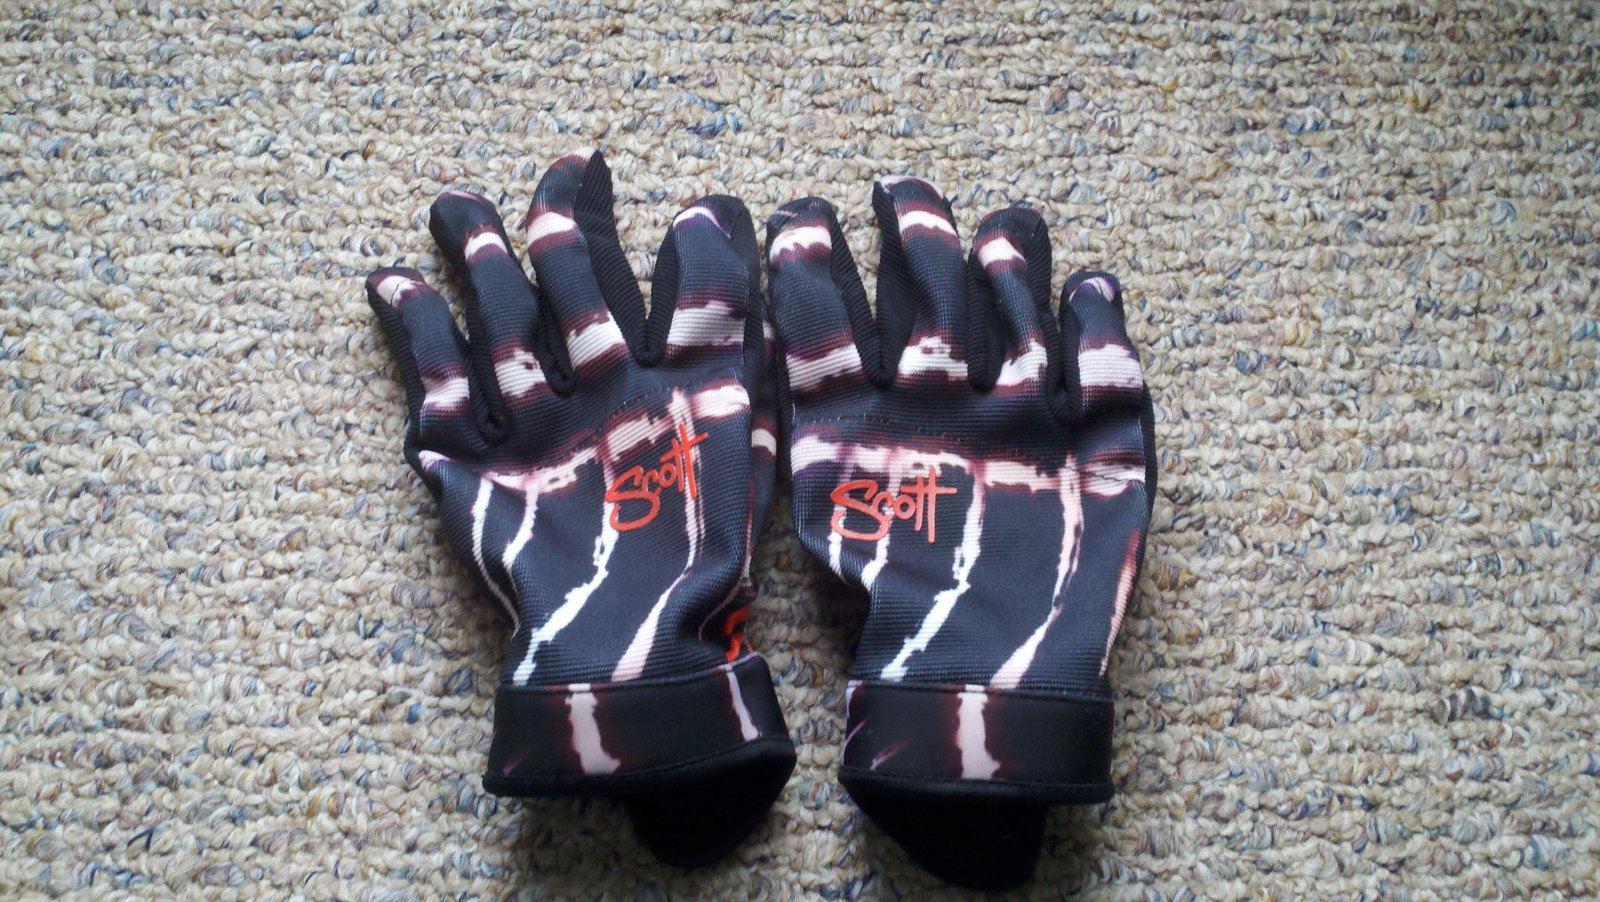 Scott Gloves